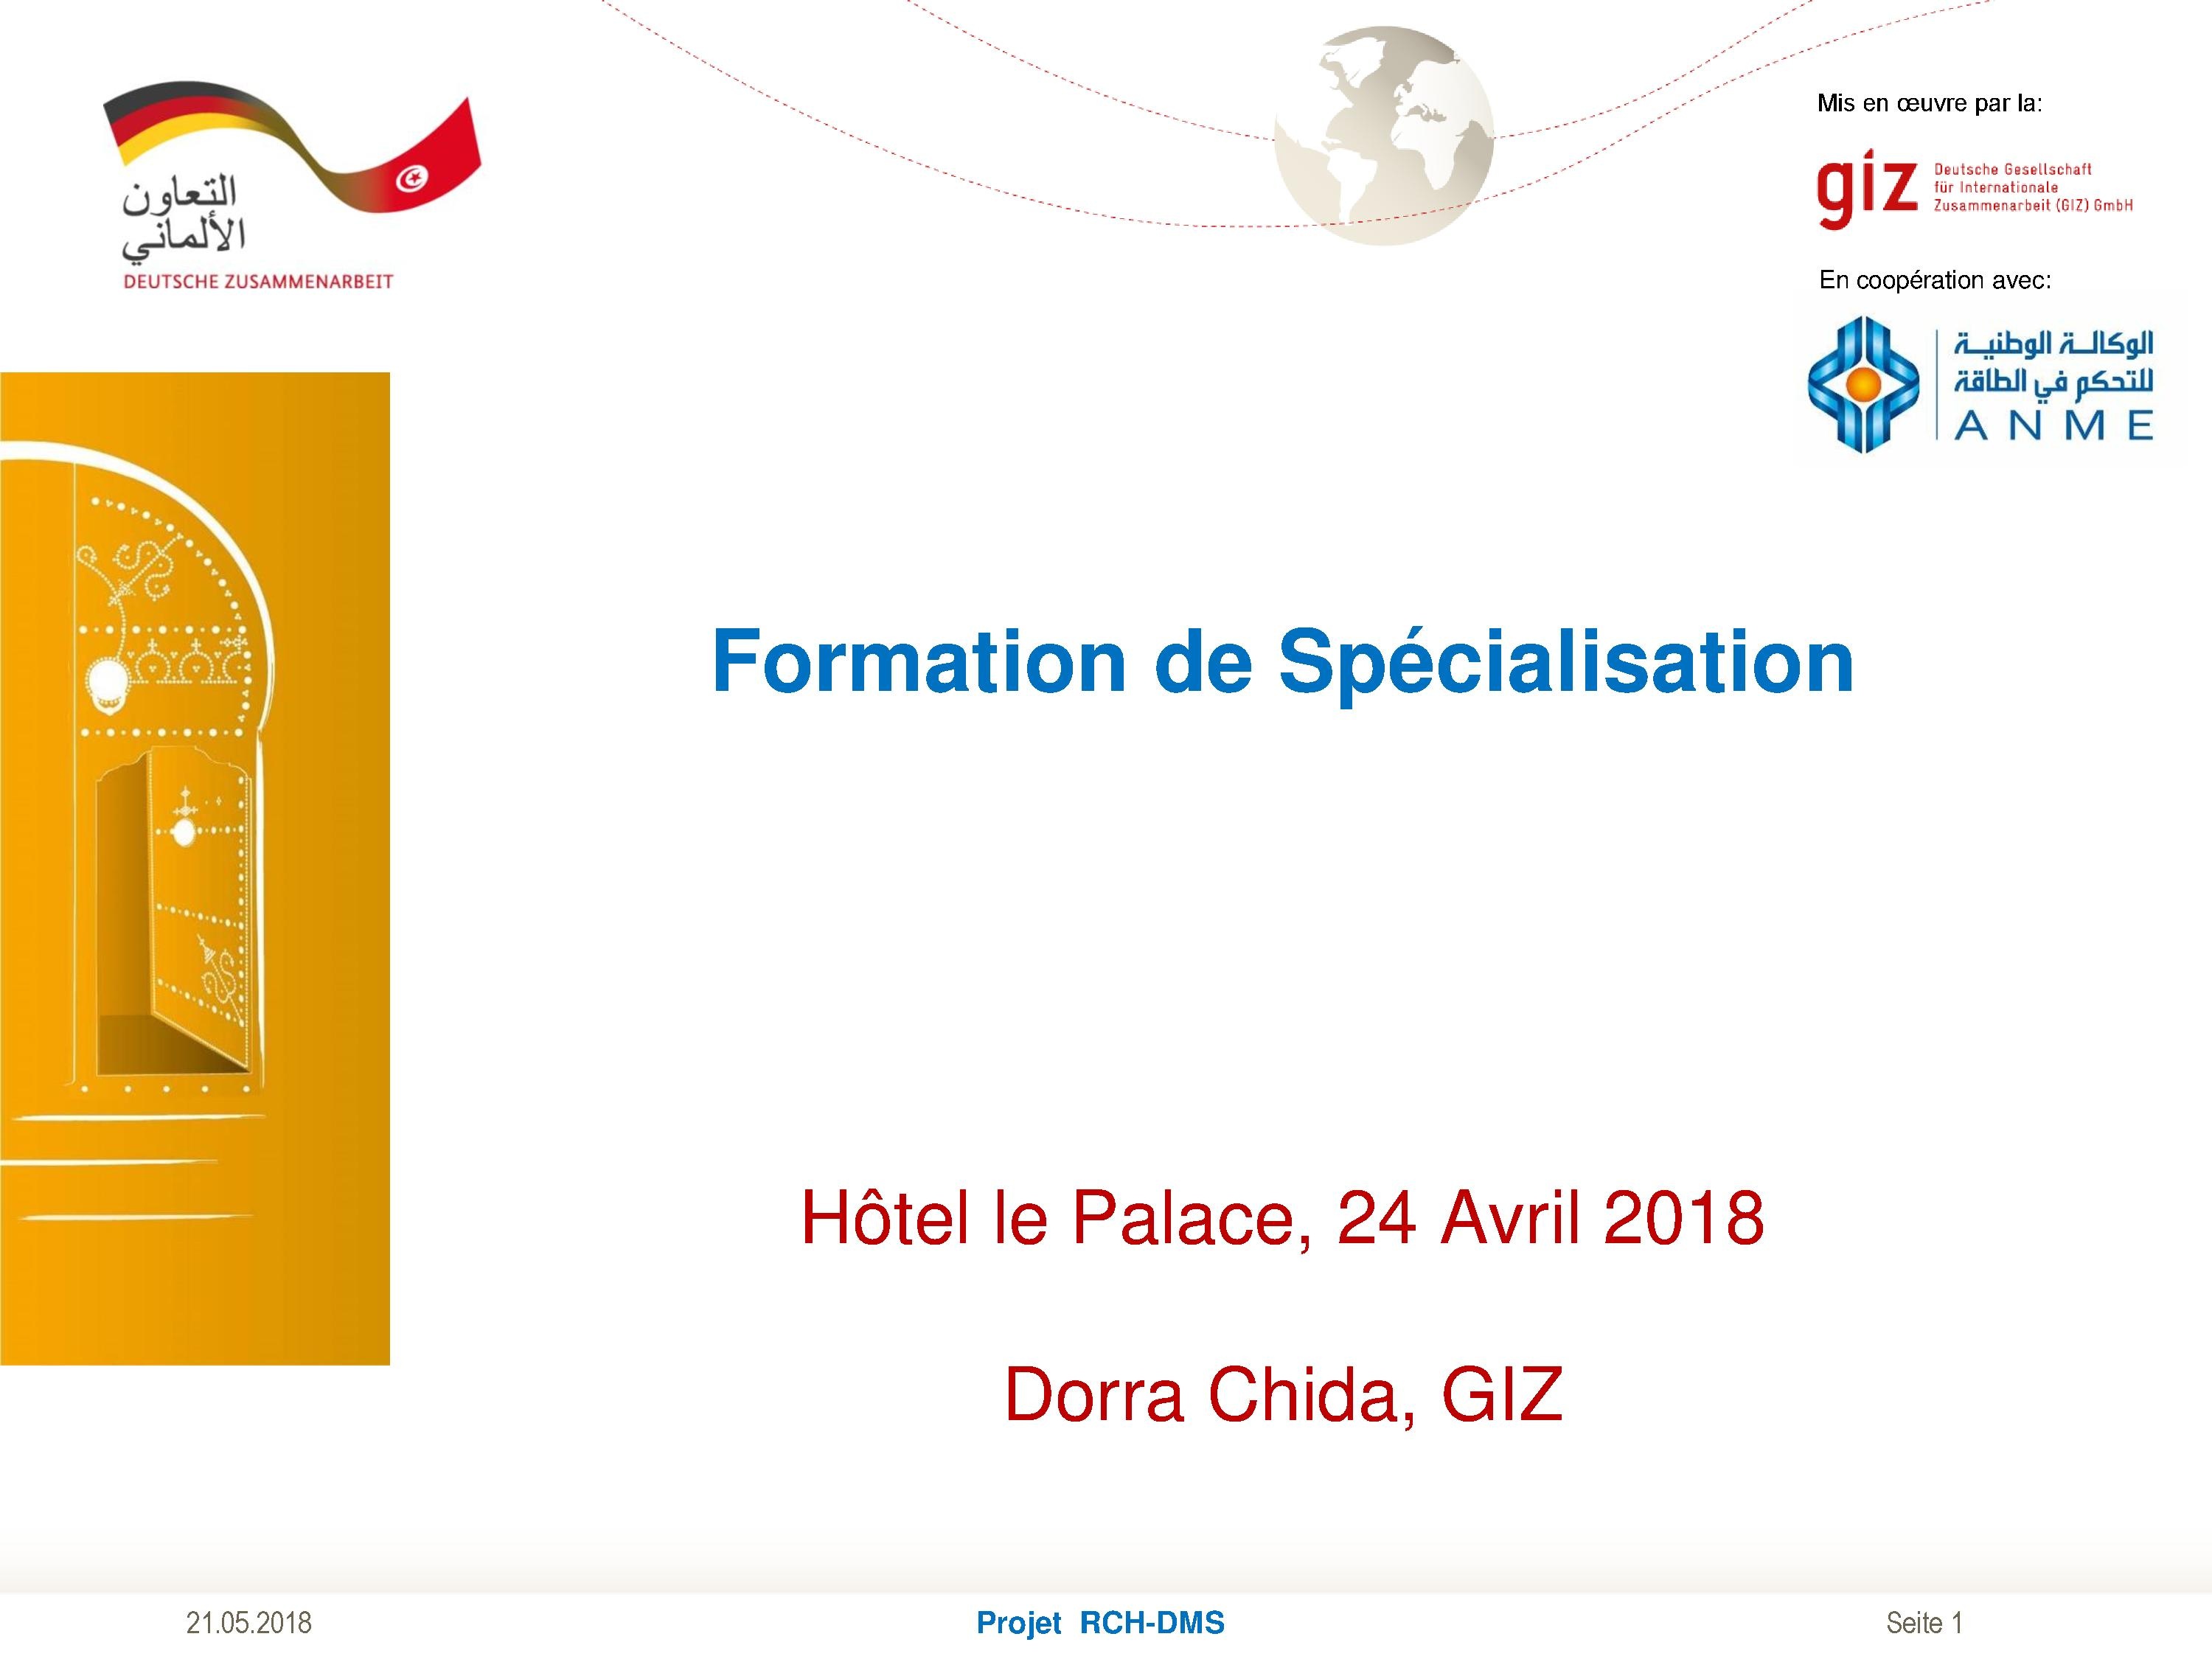 File:3.Présentation formation de specialisation Dorra Chida.pdf